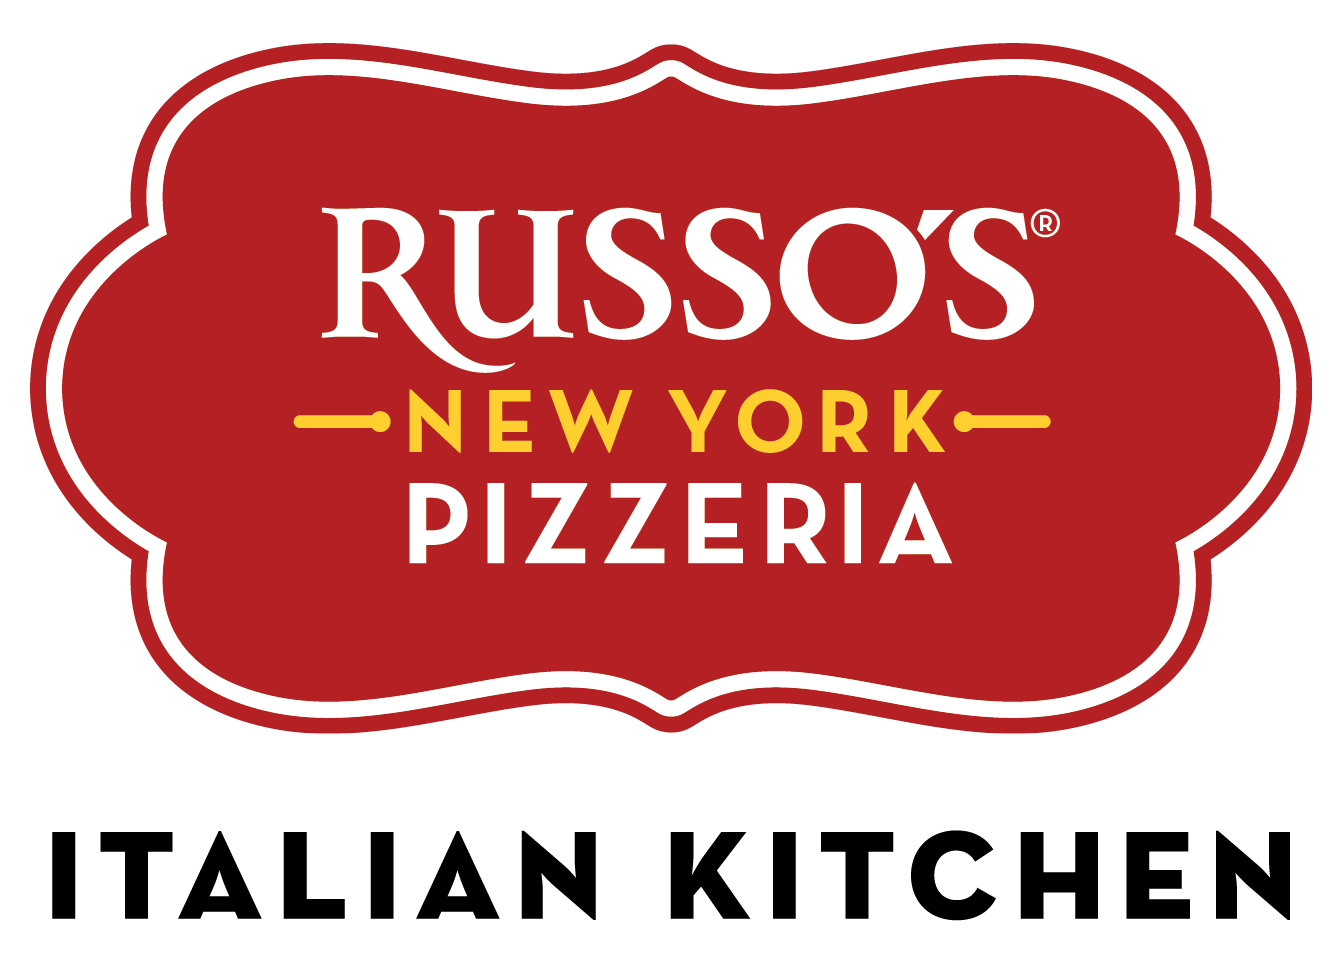 russos new york pizzeria & italian kitchen - katy reserve